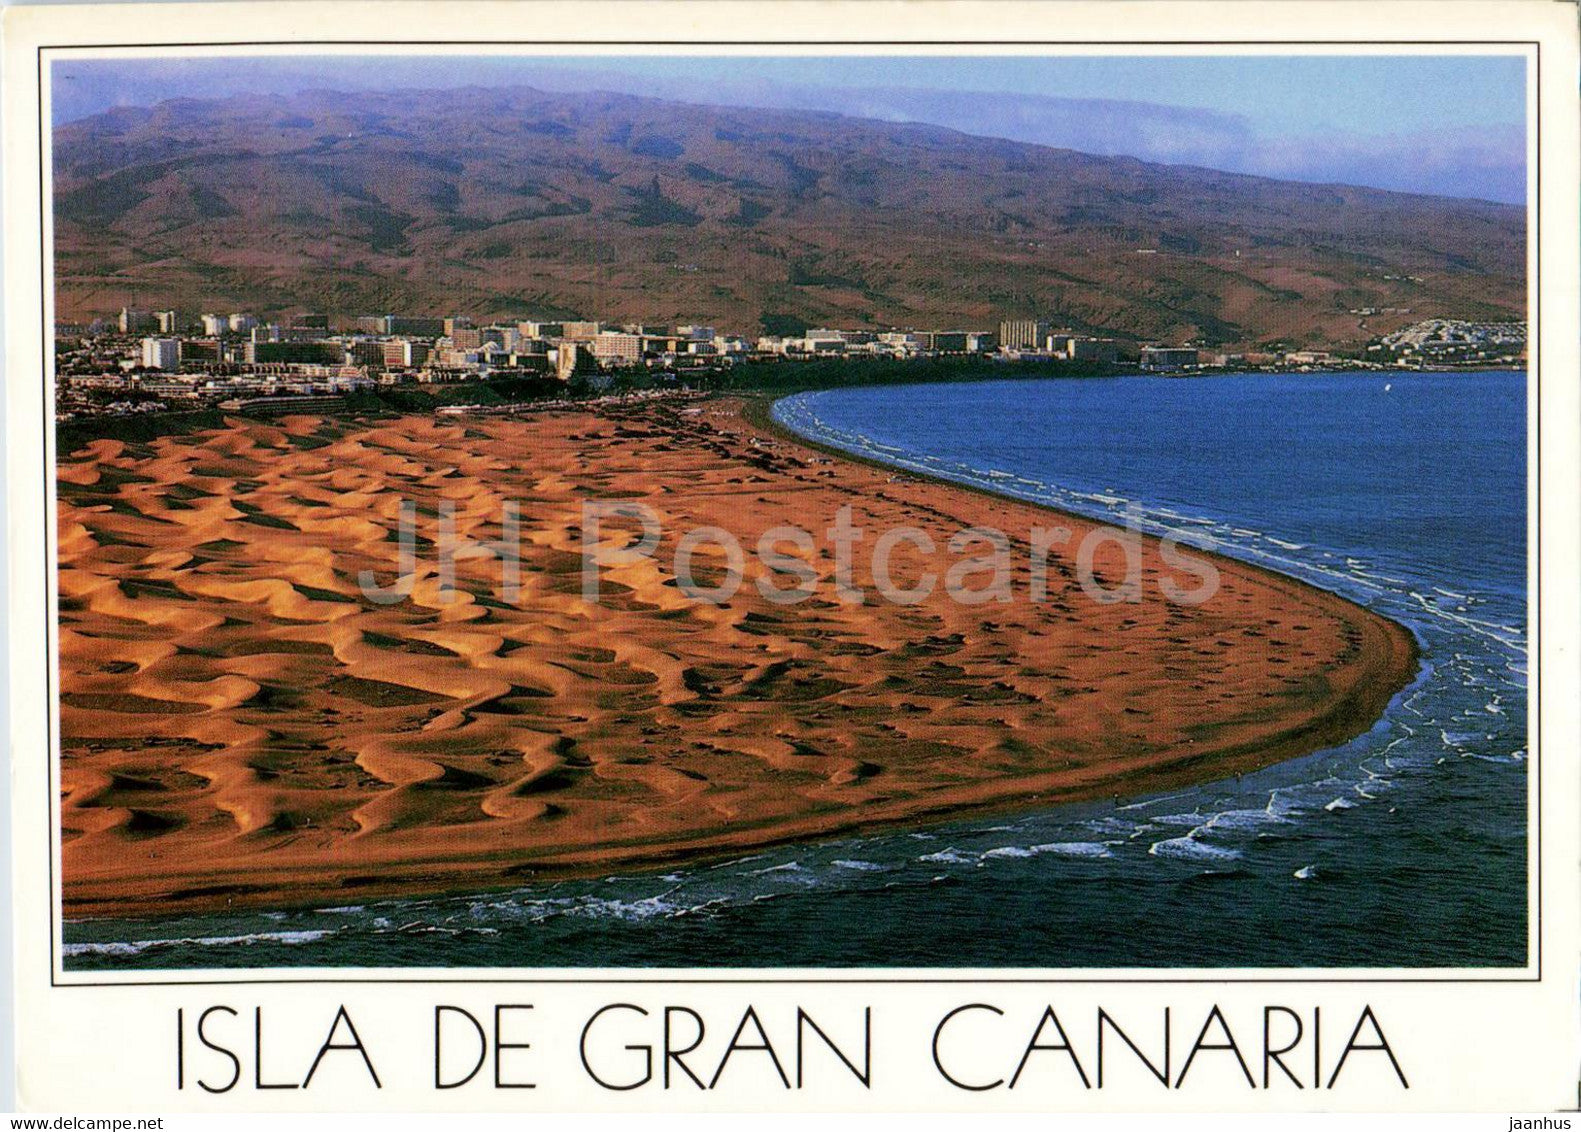 Isla de Gran Canaria - Playa del Ingles - 59 - Spain - used - JH Postcards